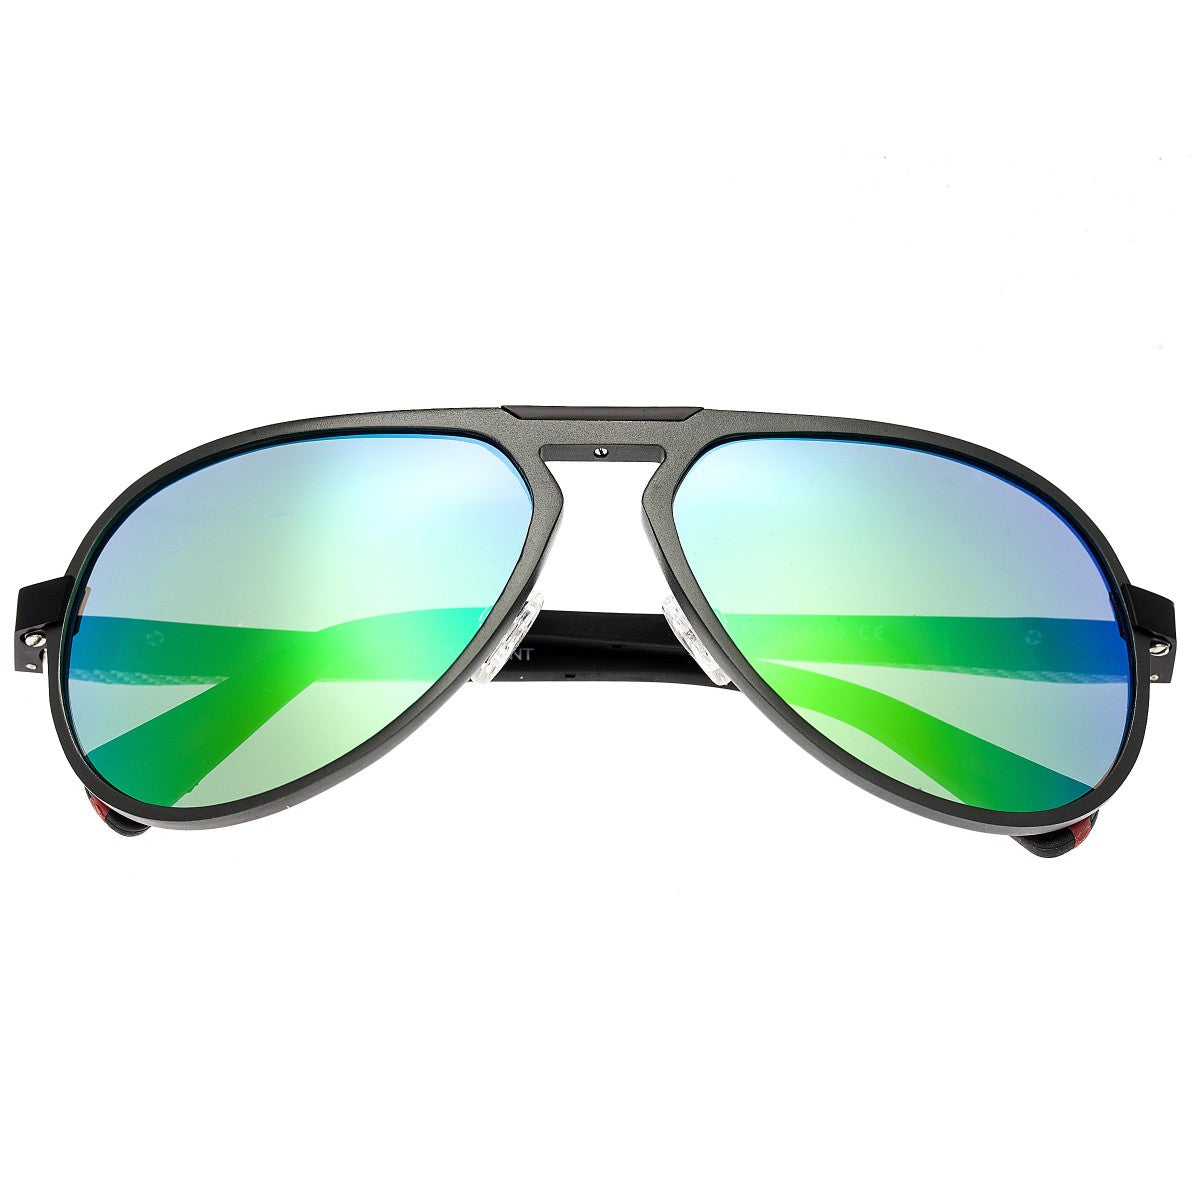 Breed Octans Titanium Polarized Sunglasses - Gunmetal/Green - BSG028ST